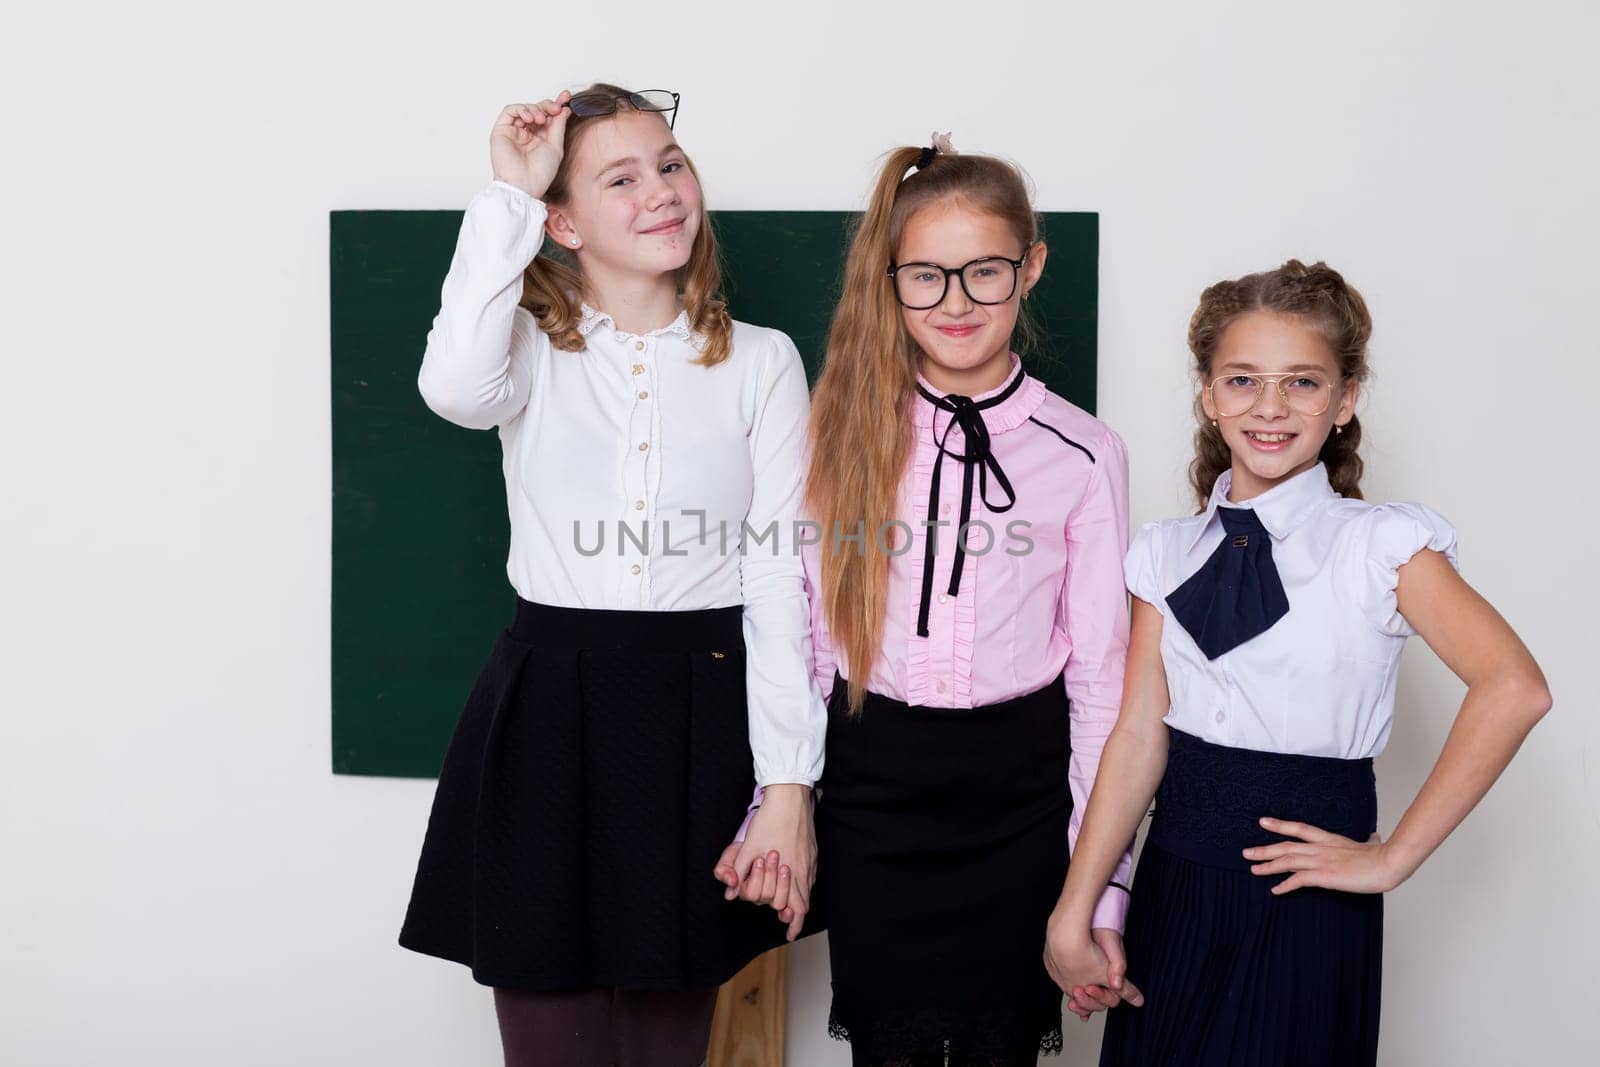 three girls schoolgirl girlfriend in class at the green board